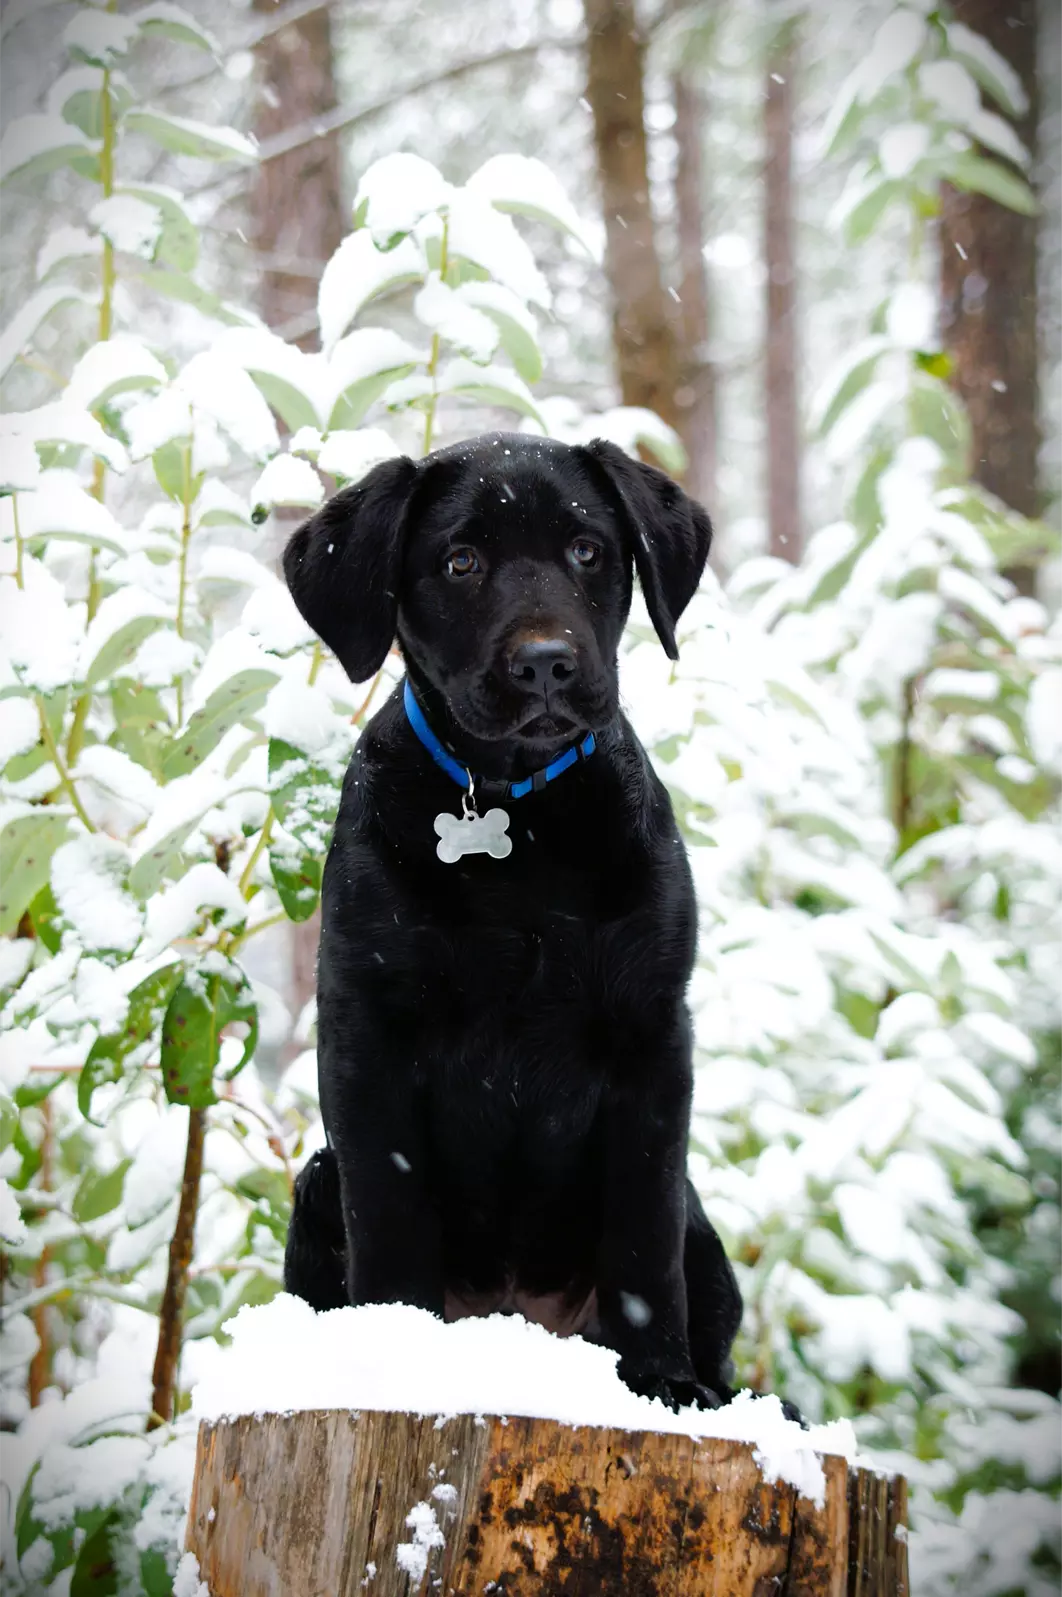 Black dog in snowy forest sitting on tree stump.